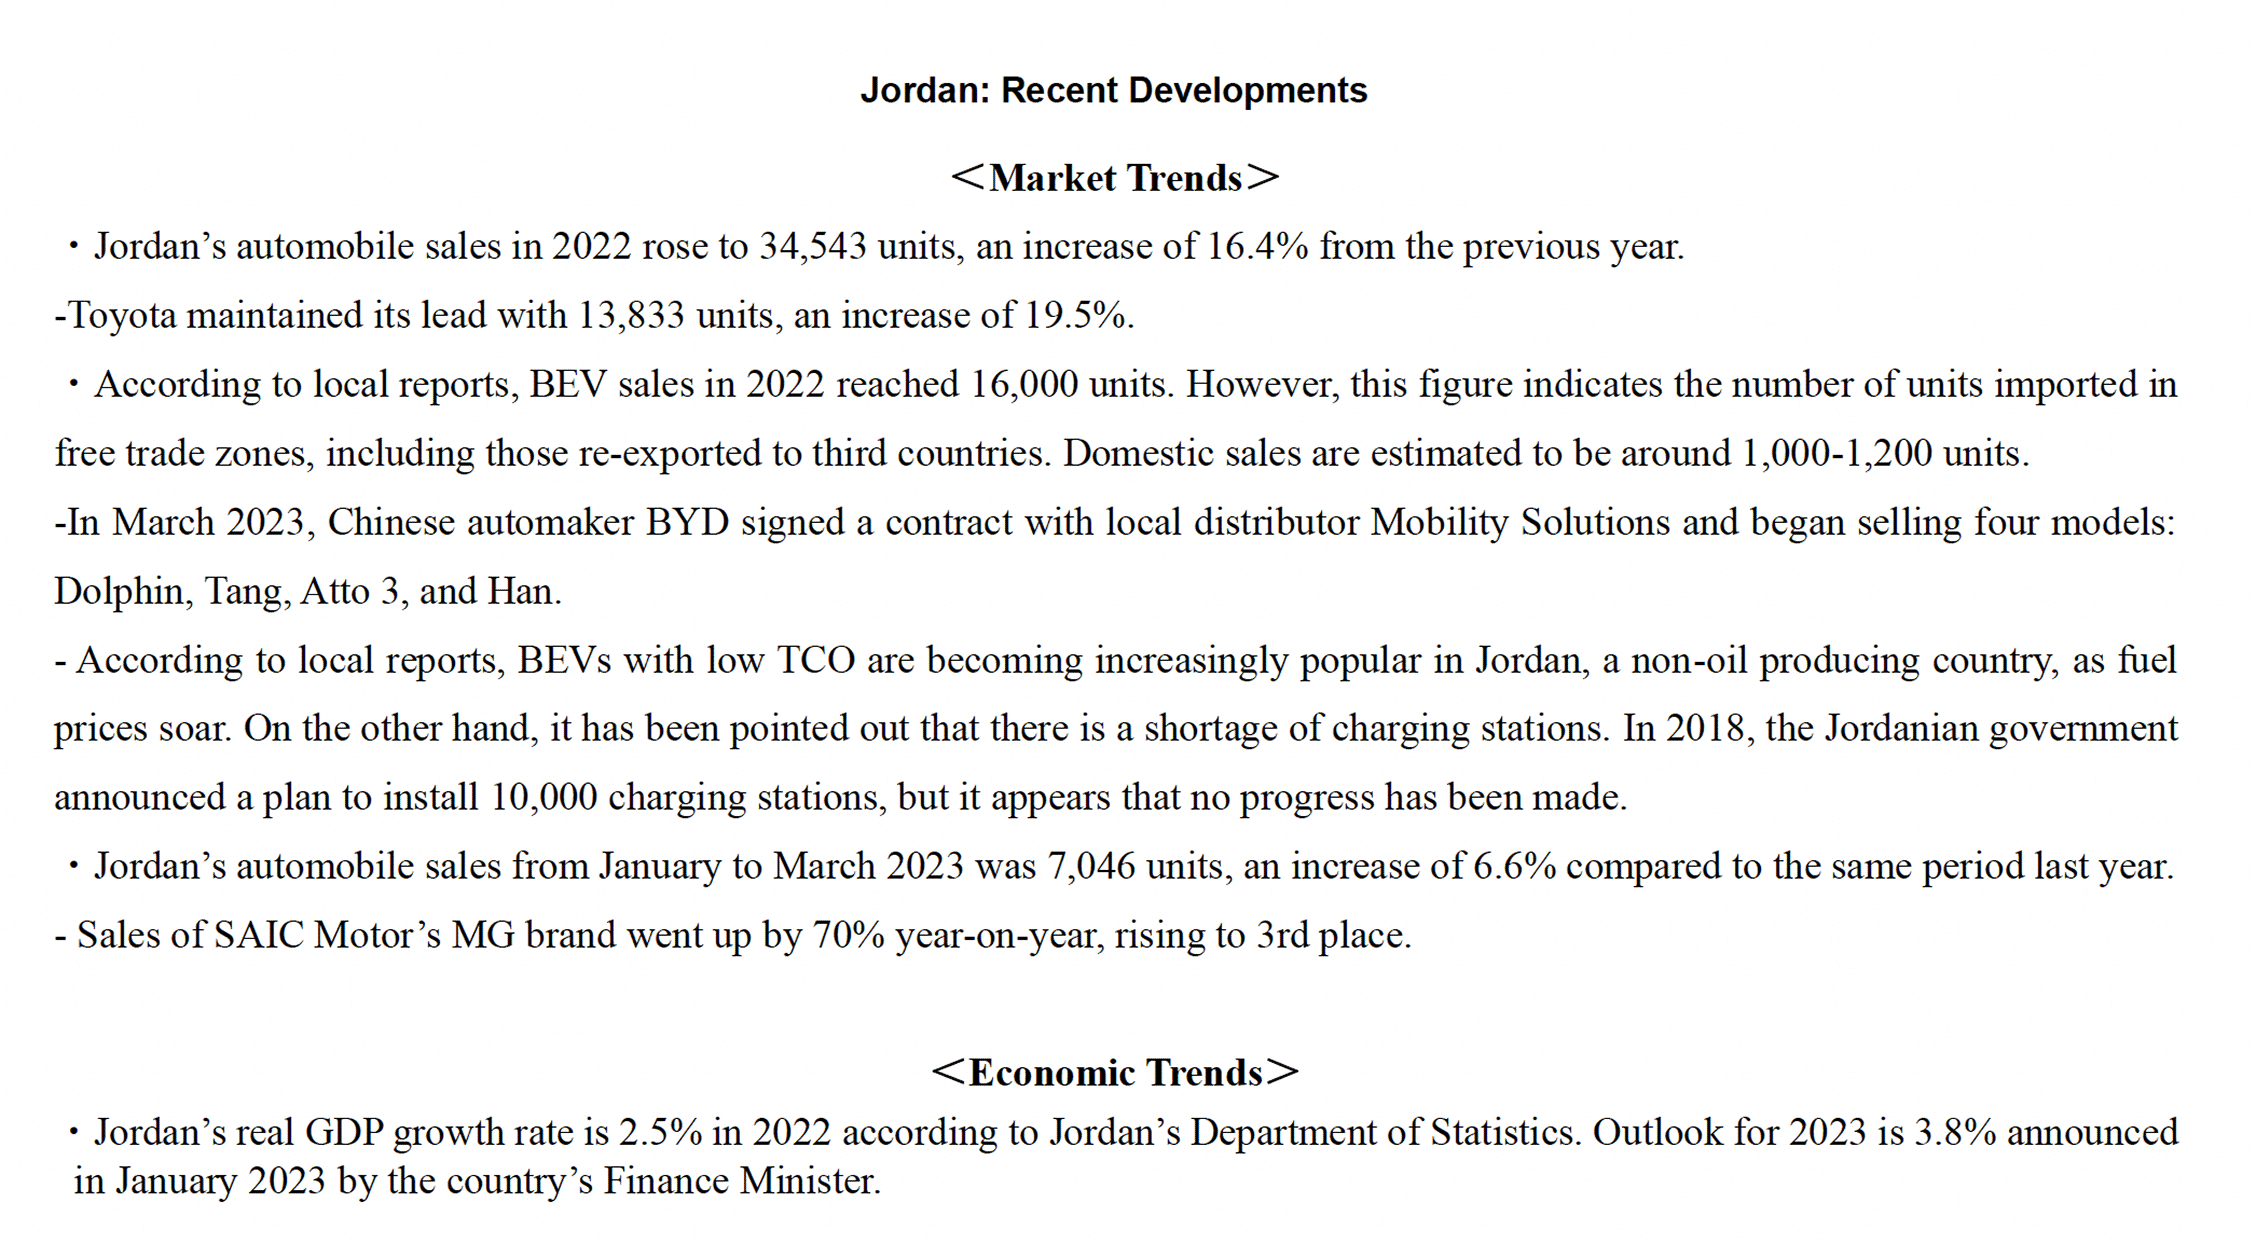 Text: Jordan: Recent Developments